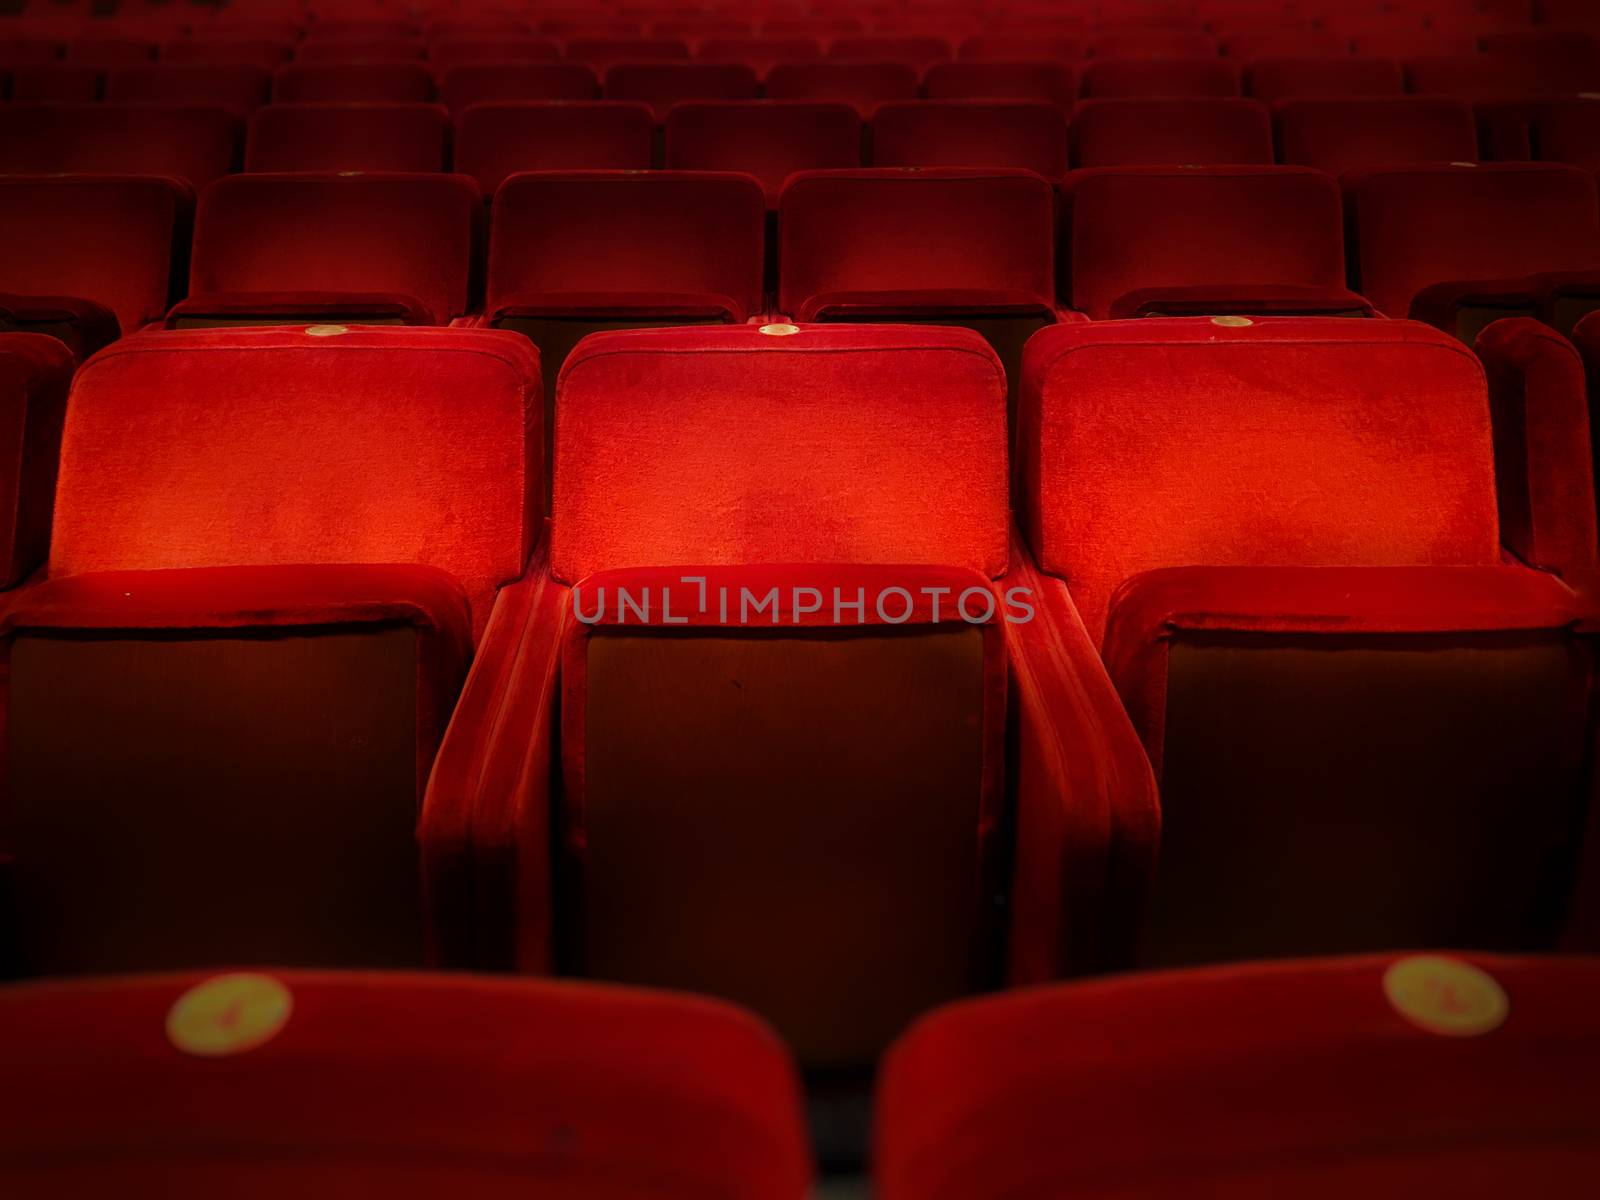 Three empty red velvet armchairs illuminated inside a concert hall